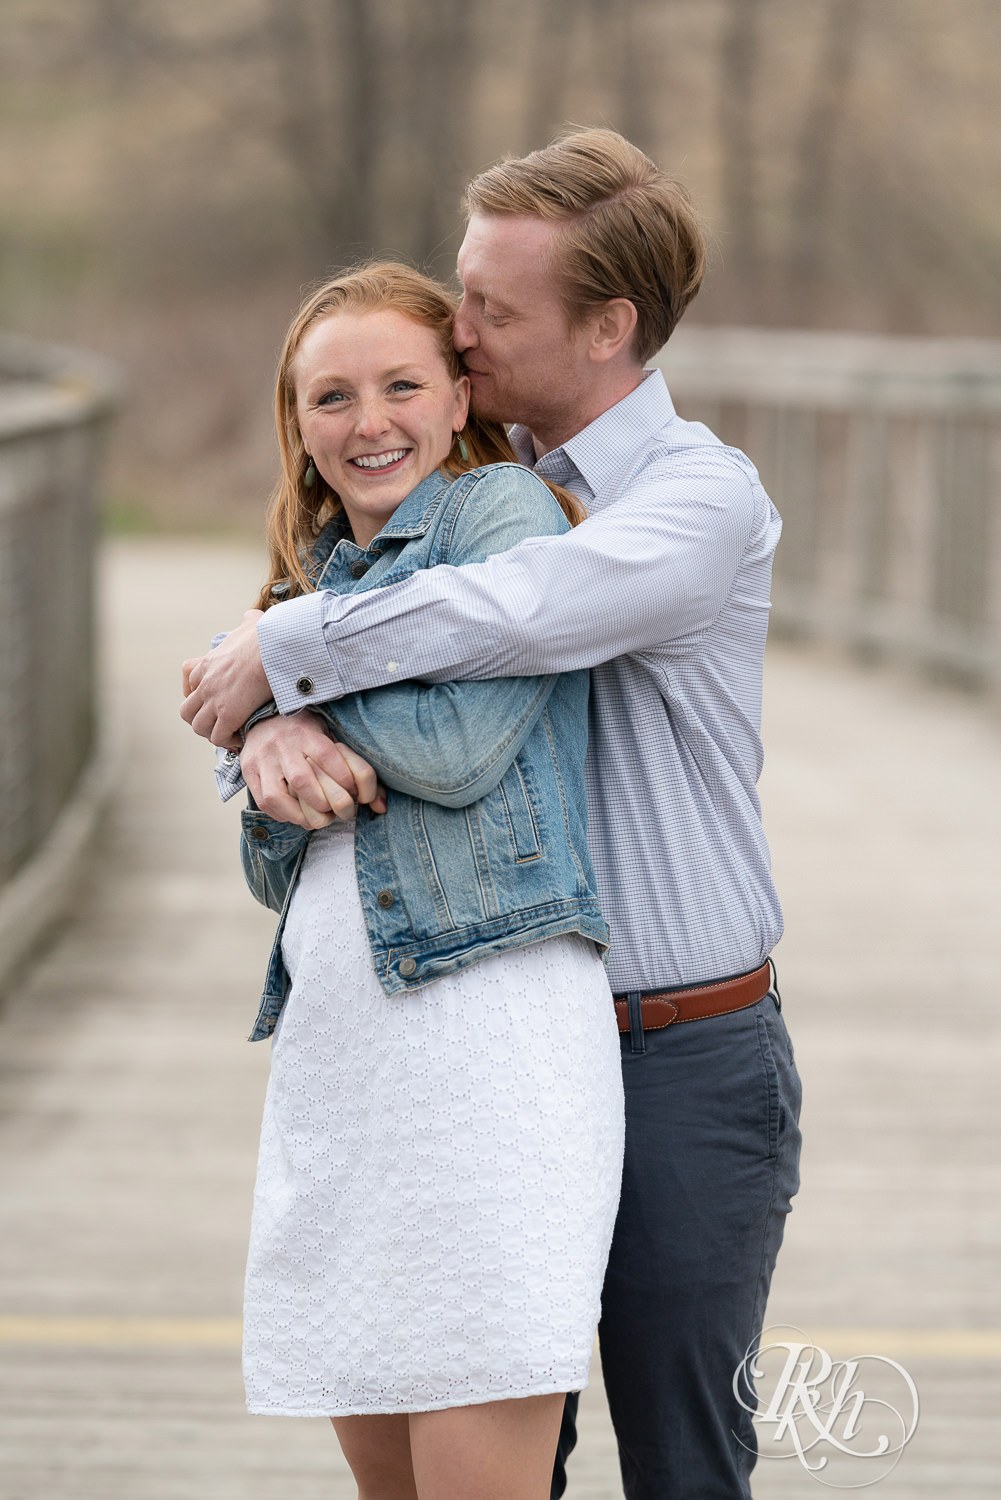 Redhead couple in denim smile and hug on bridge on cloudy day in Eagan, Minnesota.